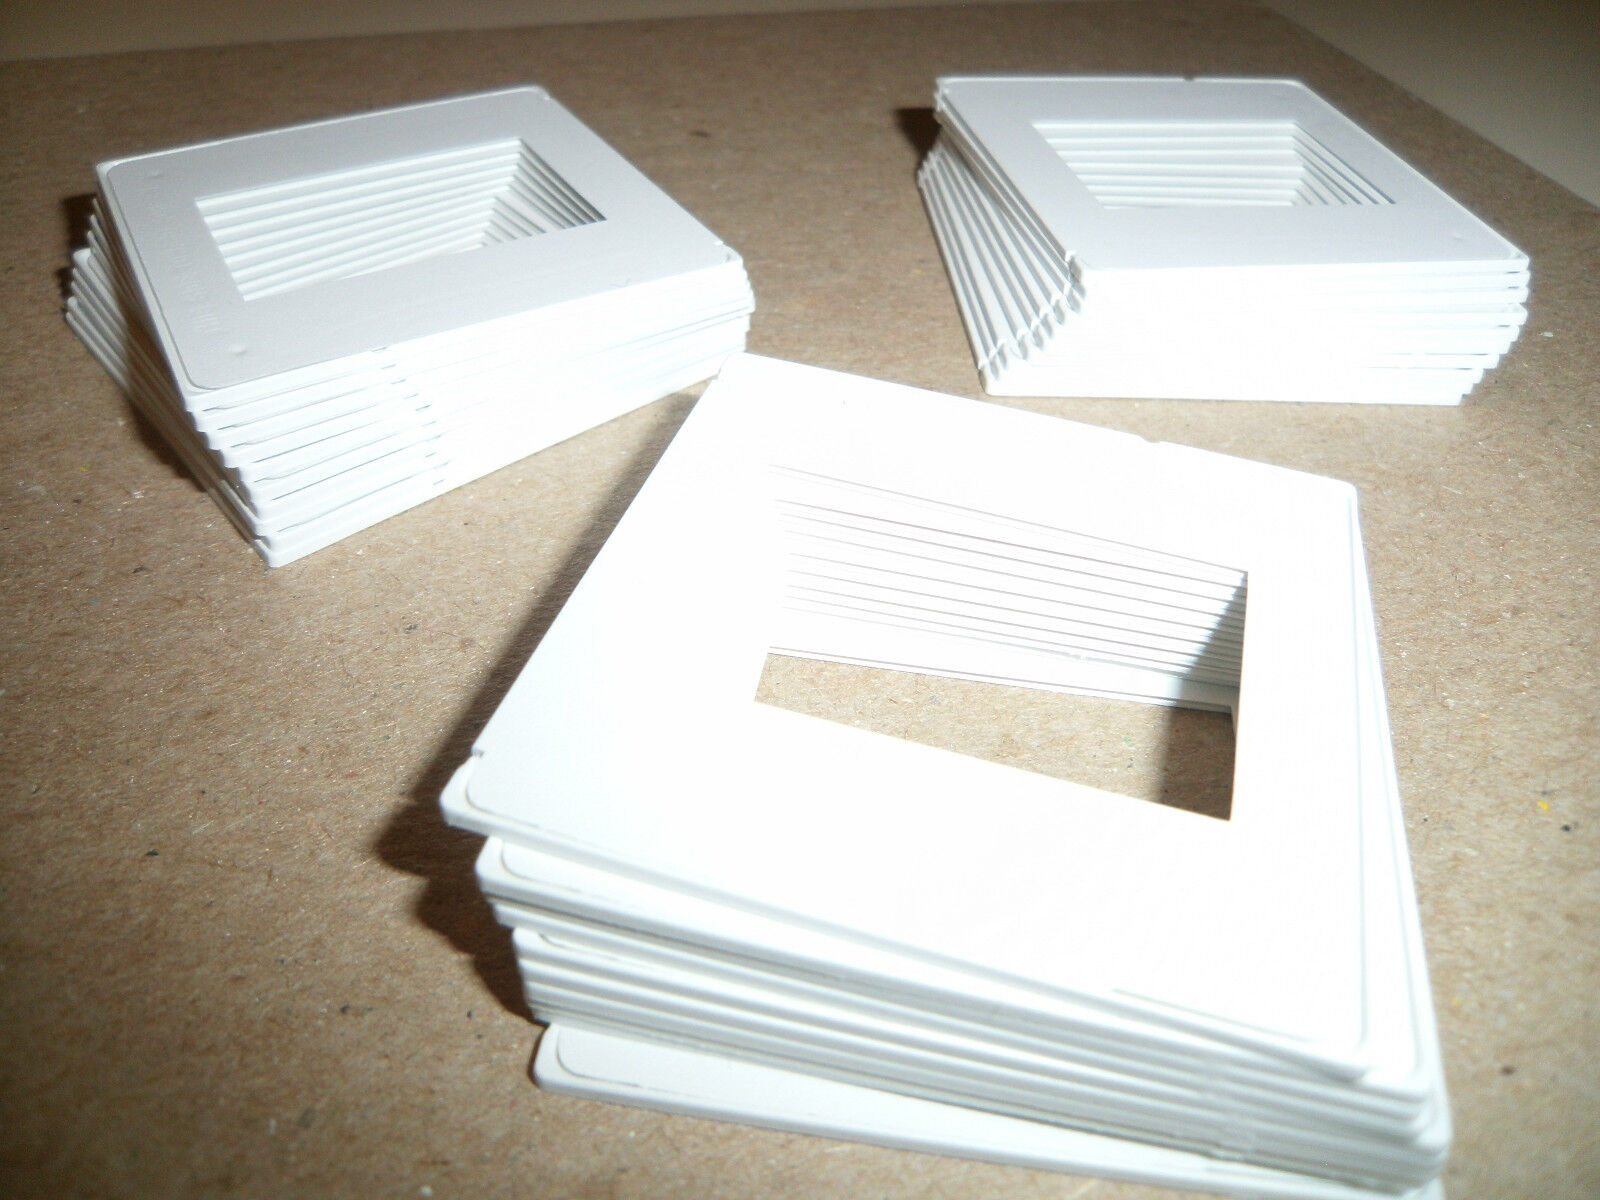 LOT of (30) Pakon Plastic 35mm Slide Mounts (White) Easy To Use! (BRAND NEW) Pakon Does Not Apply